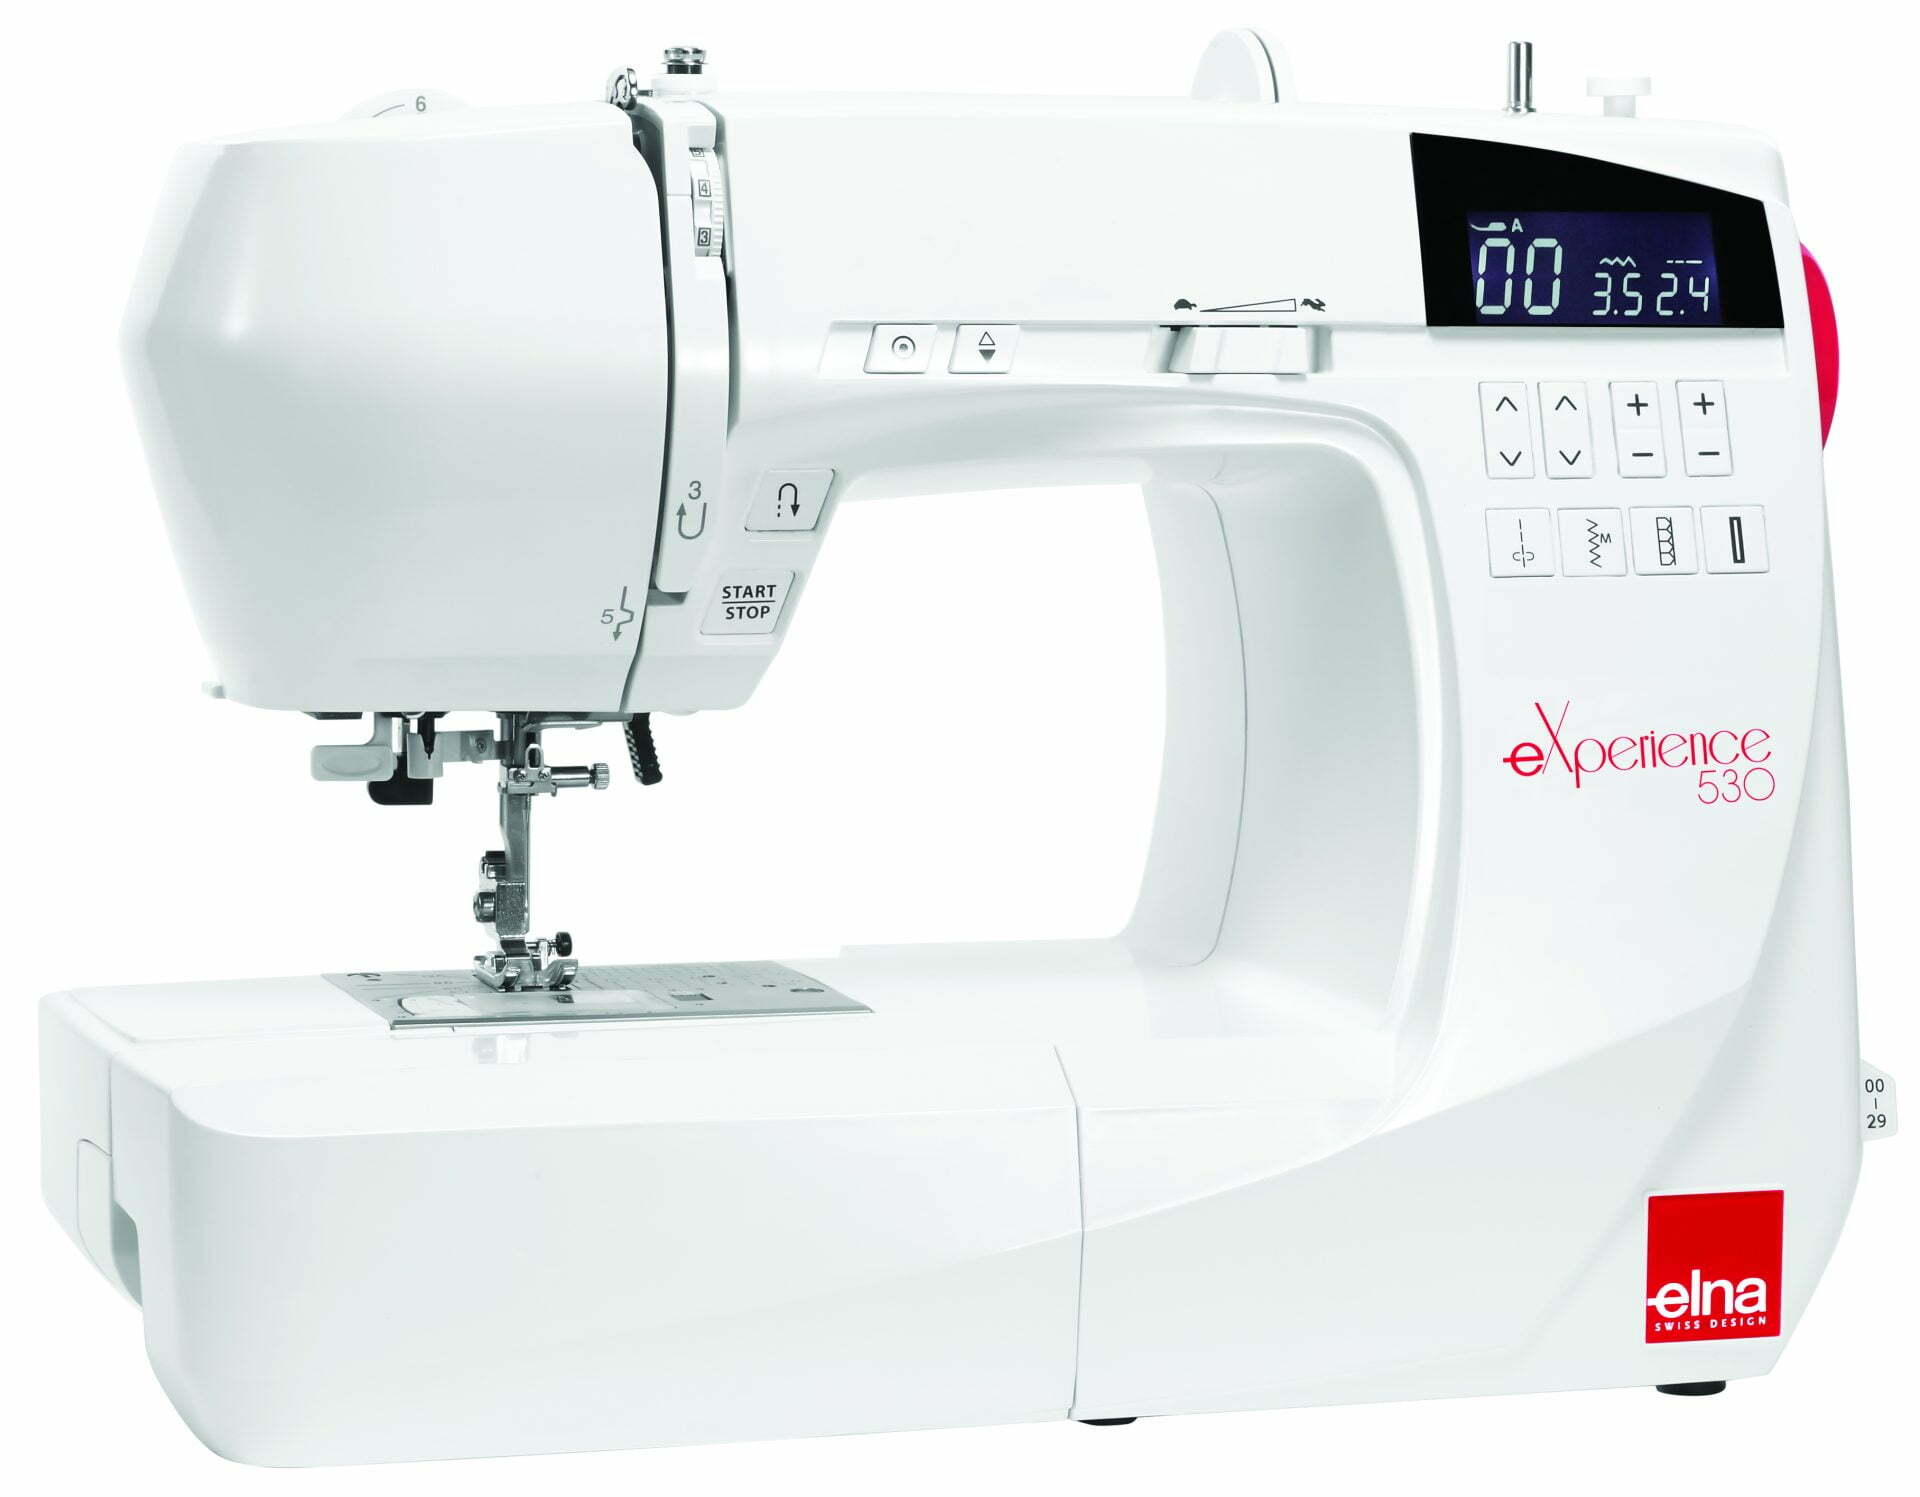 Elna Experience 530 Computerized Sewing Machine